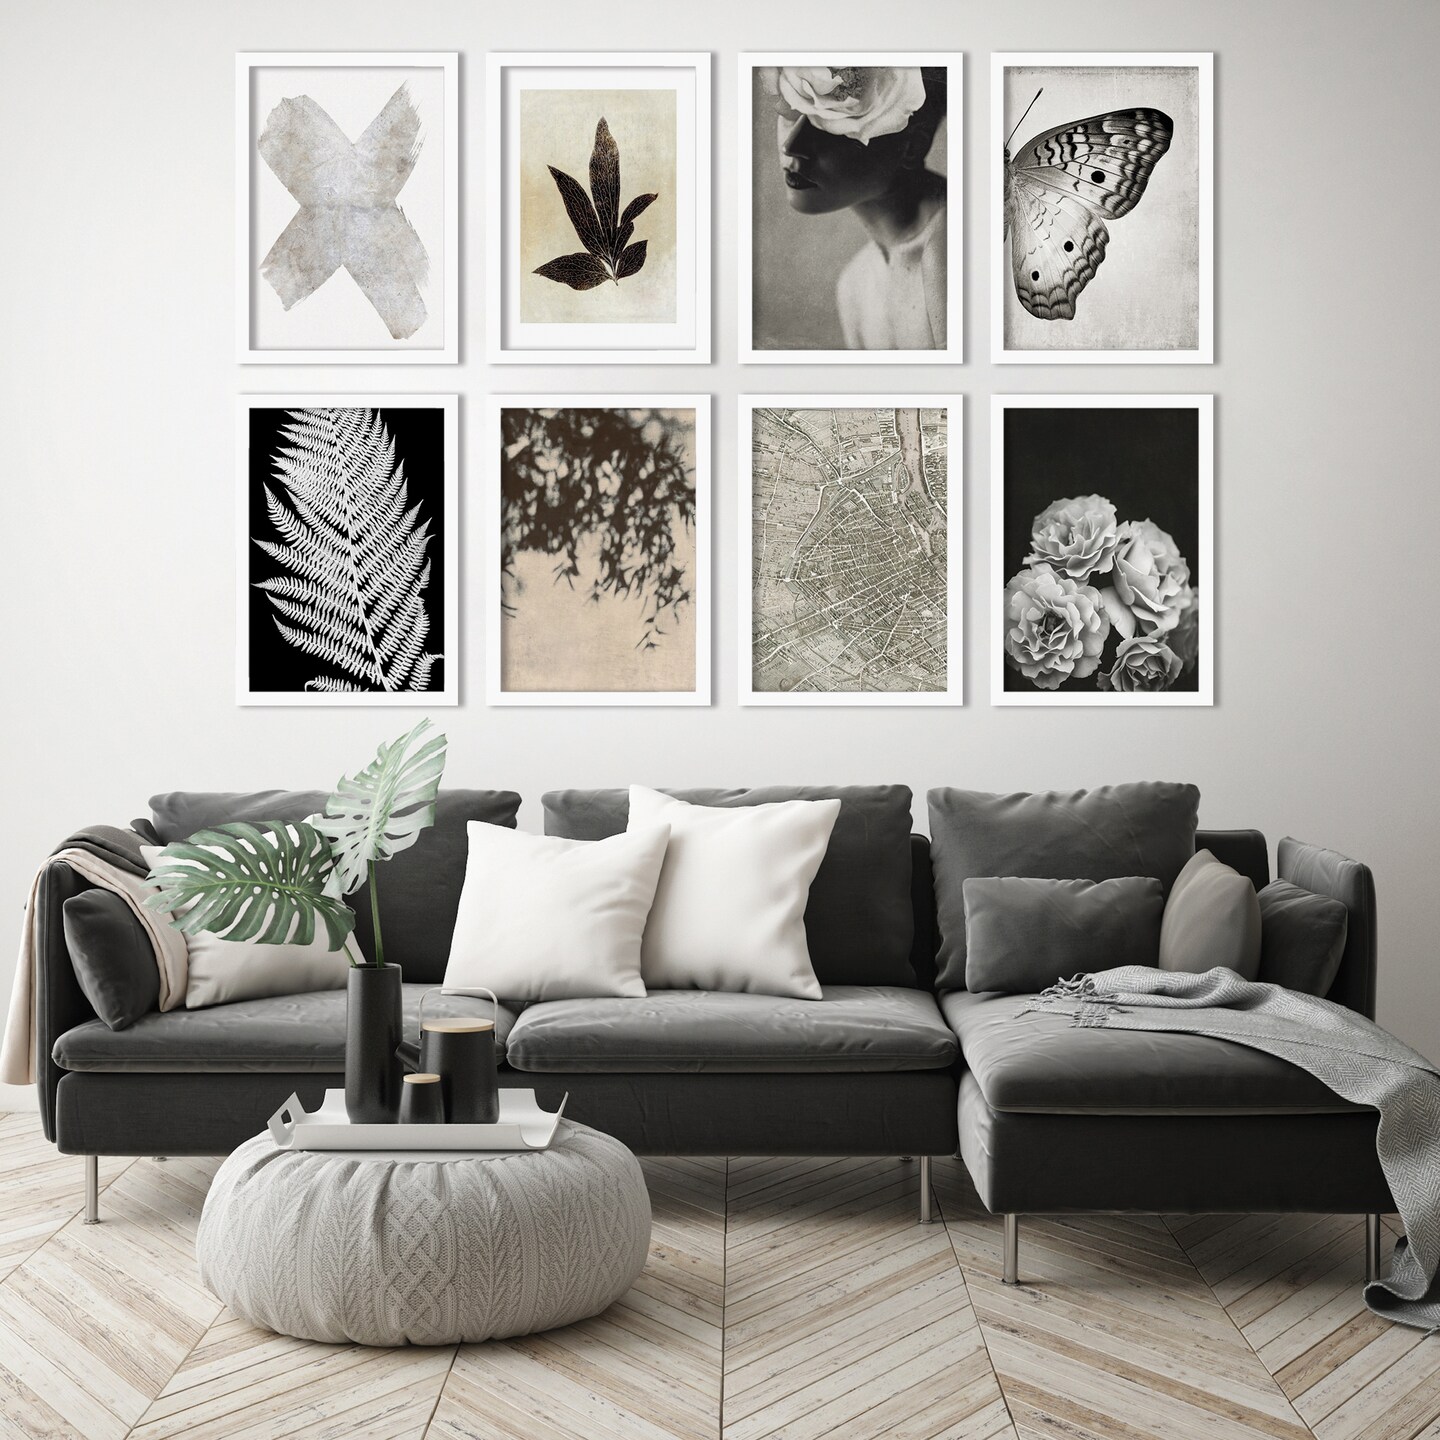 Black and White Botanicals by Chaos &#x26; Wonder Design - 8 Piece Framed Art Set